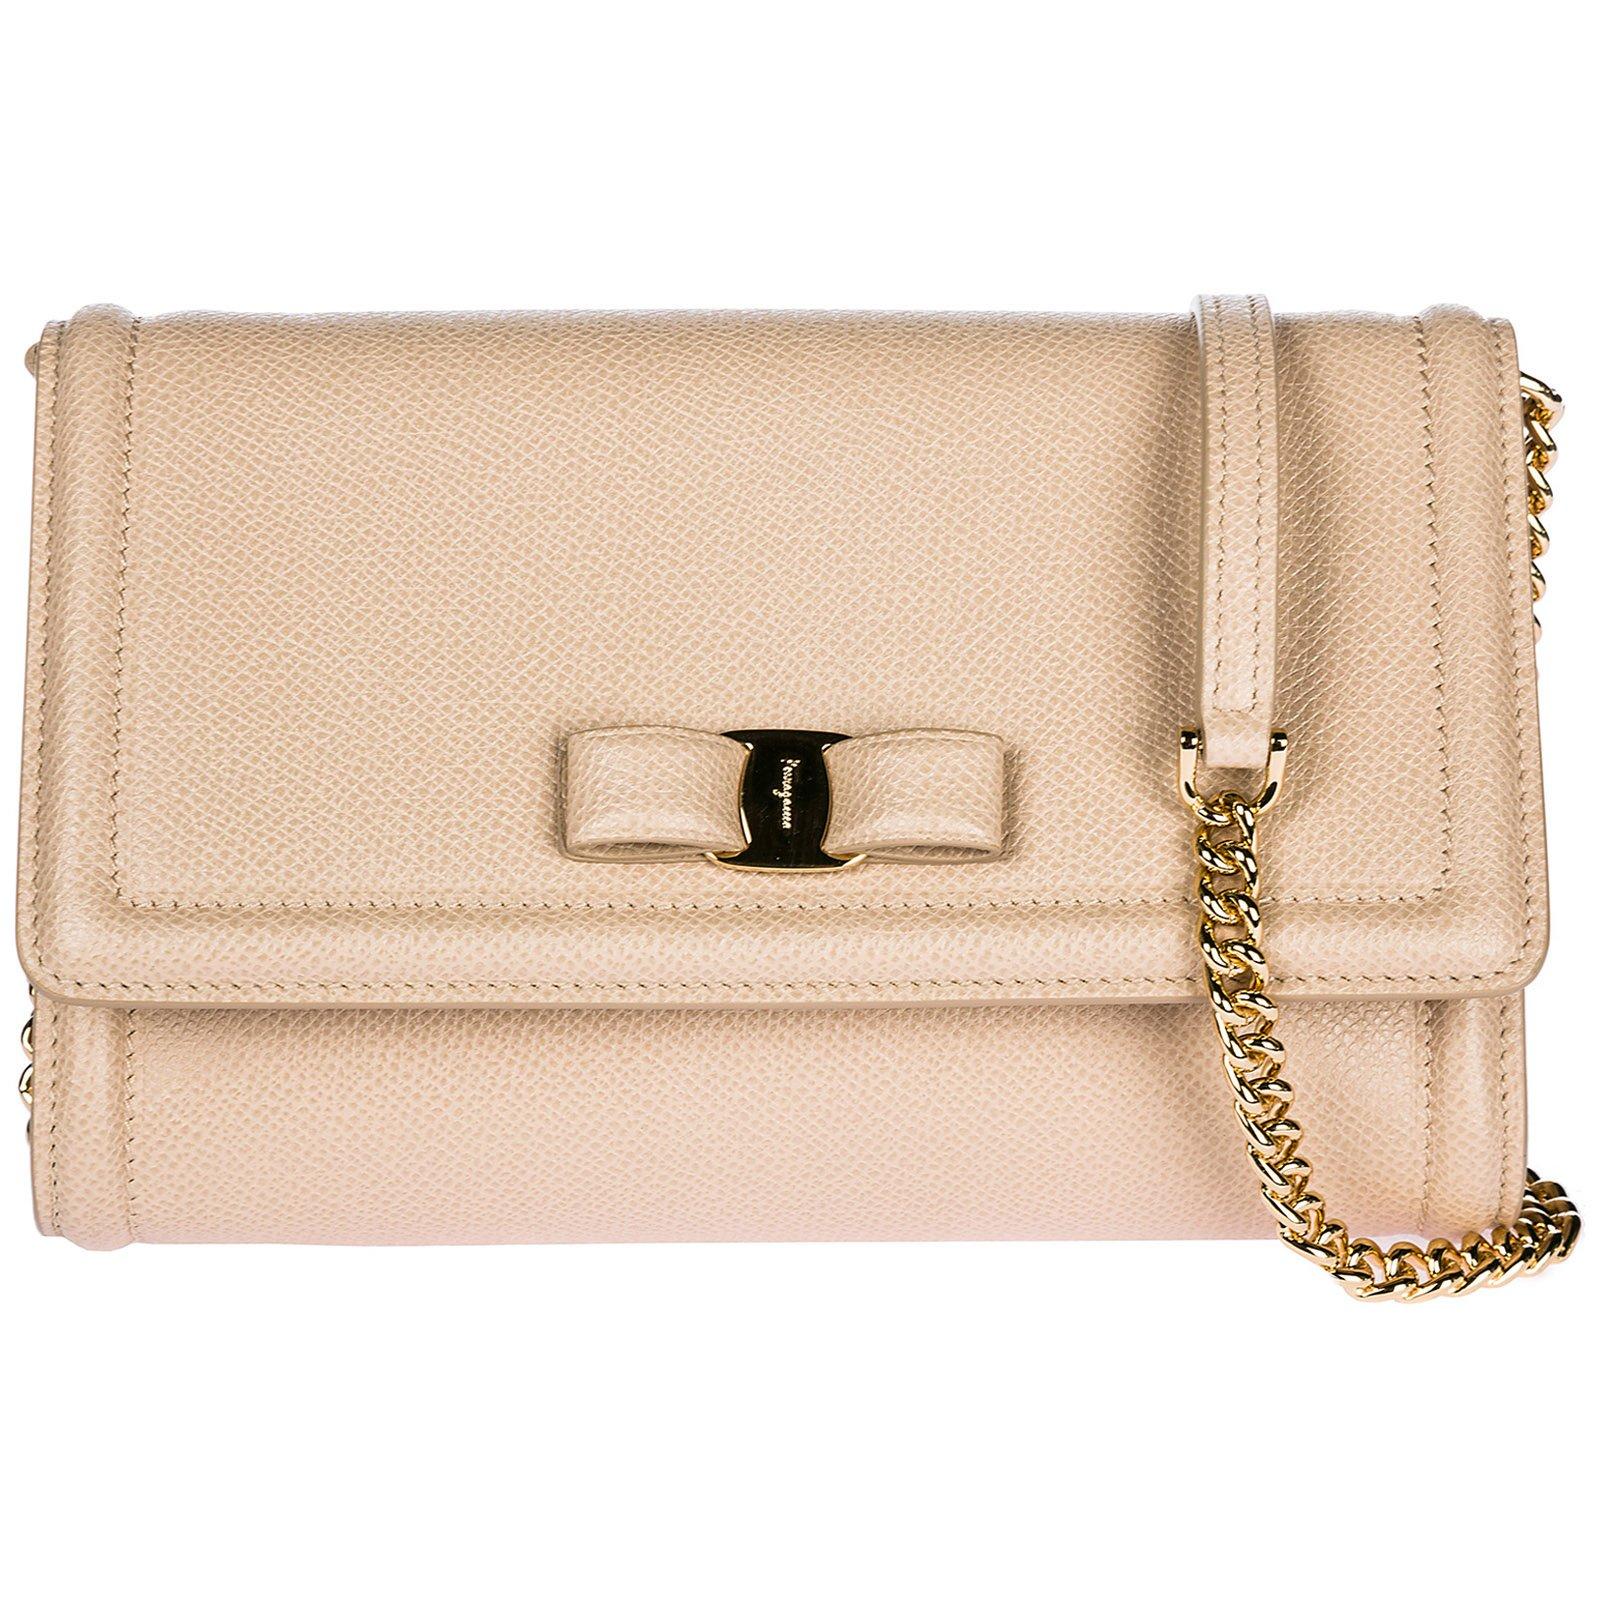 Ferragamo Leather Vara Bow Mini Bag in Beige (Natural) - Lyst